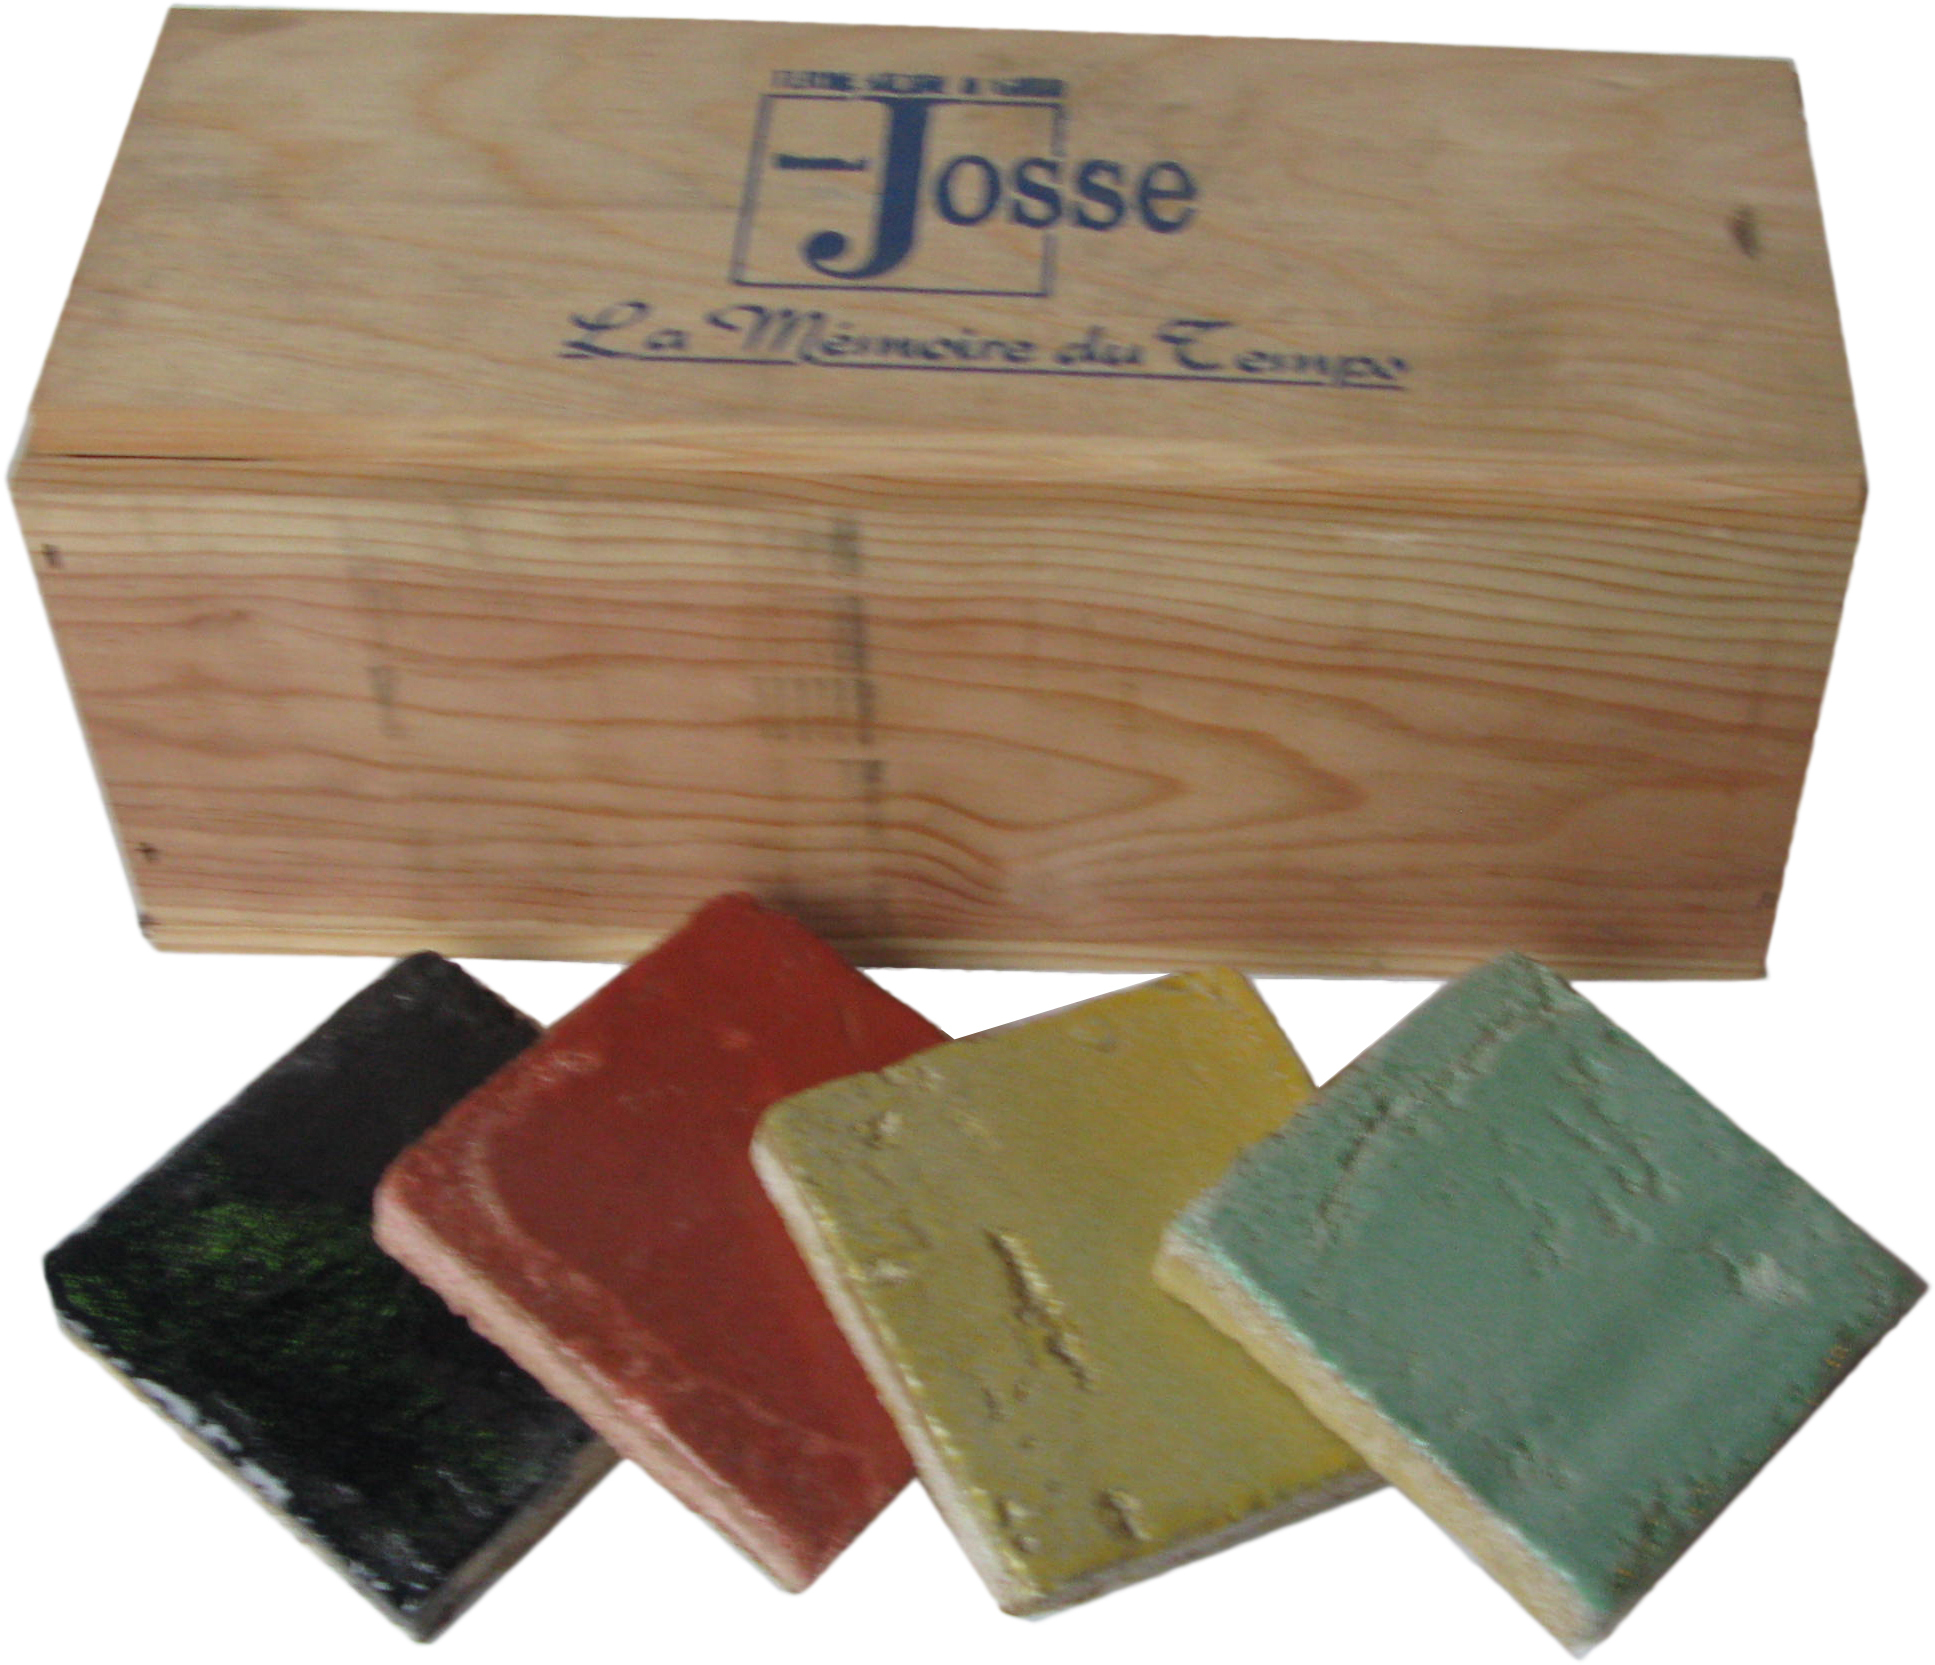 Set of samples  "JOSSE" Pastels Unis